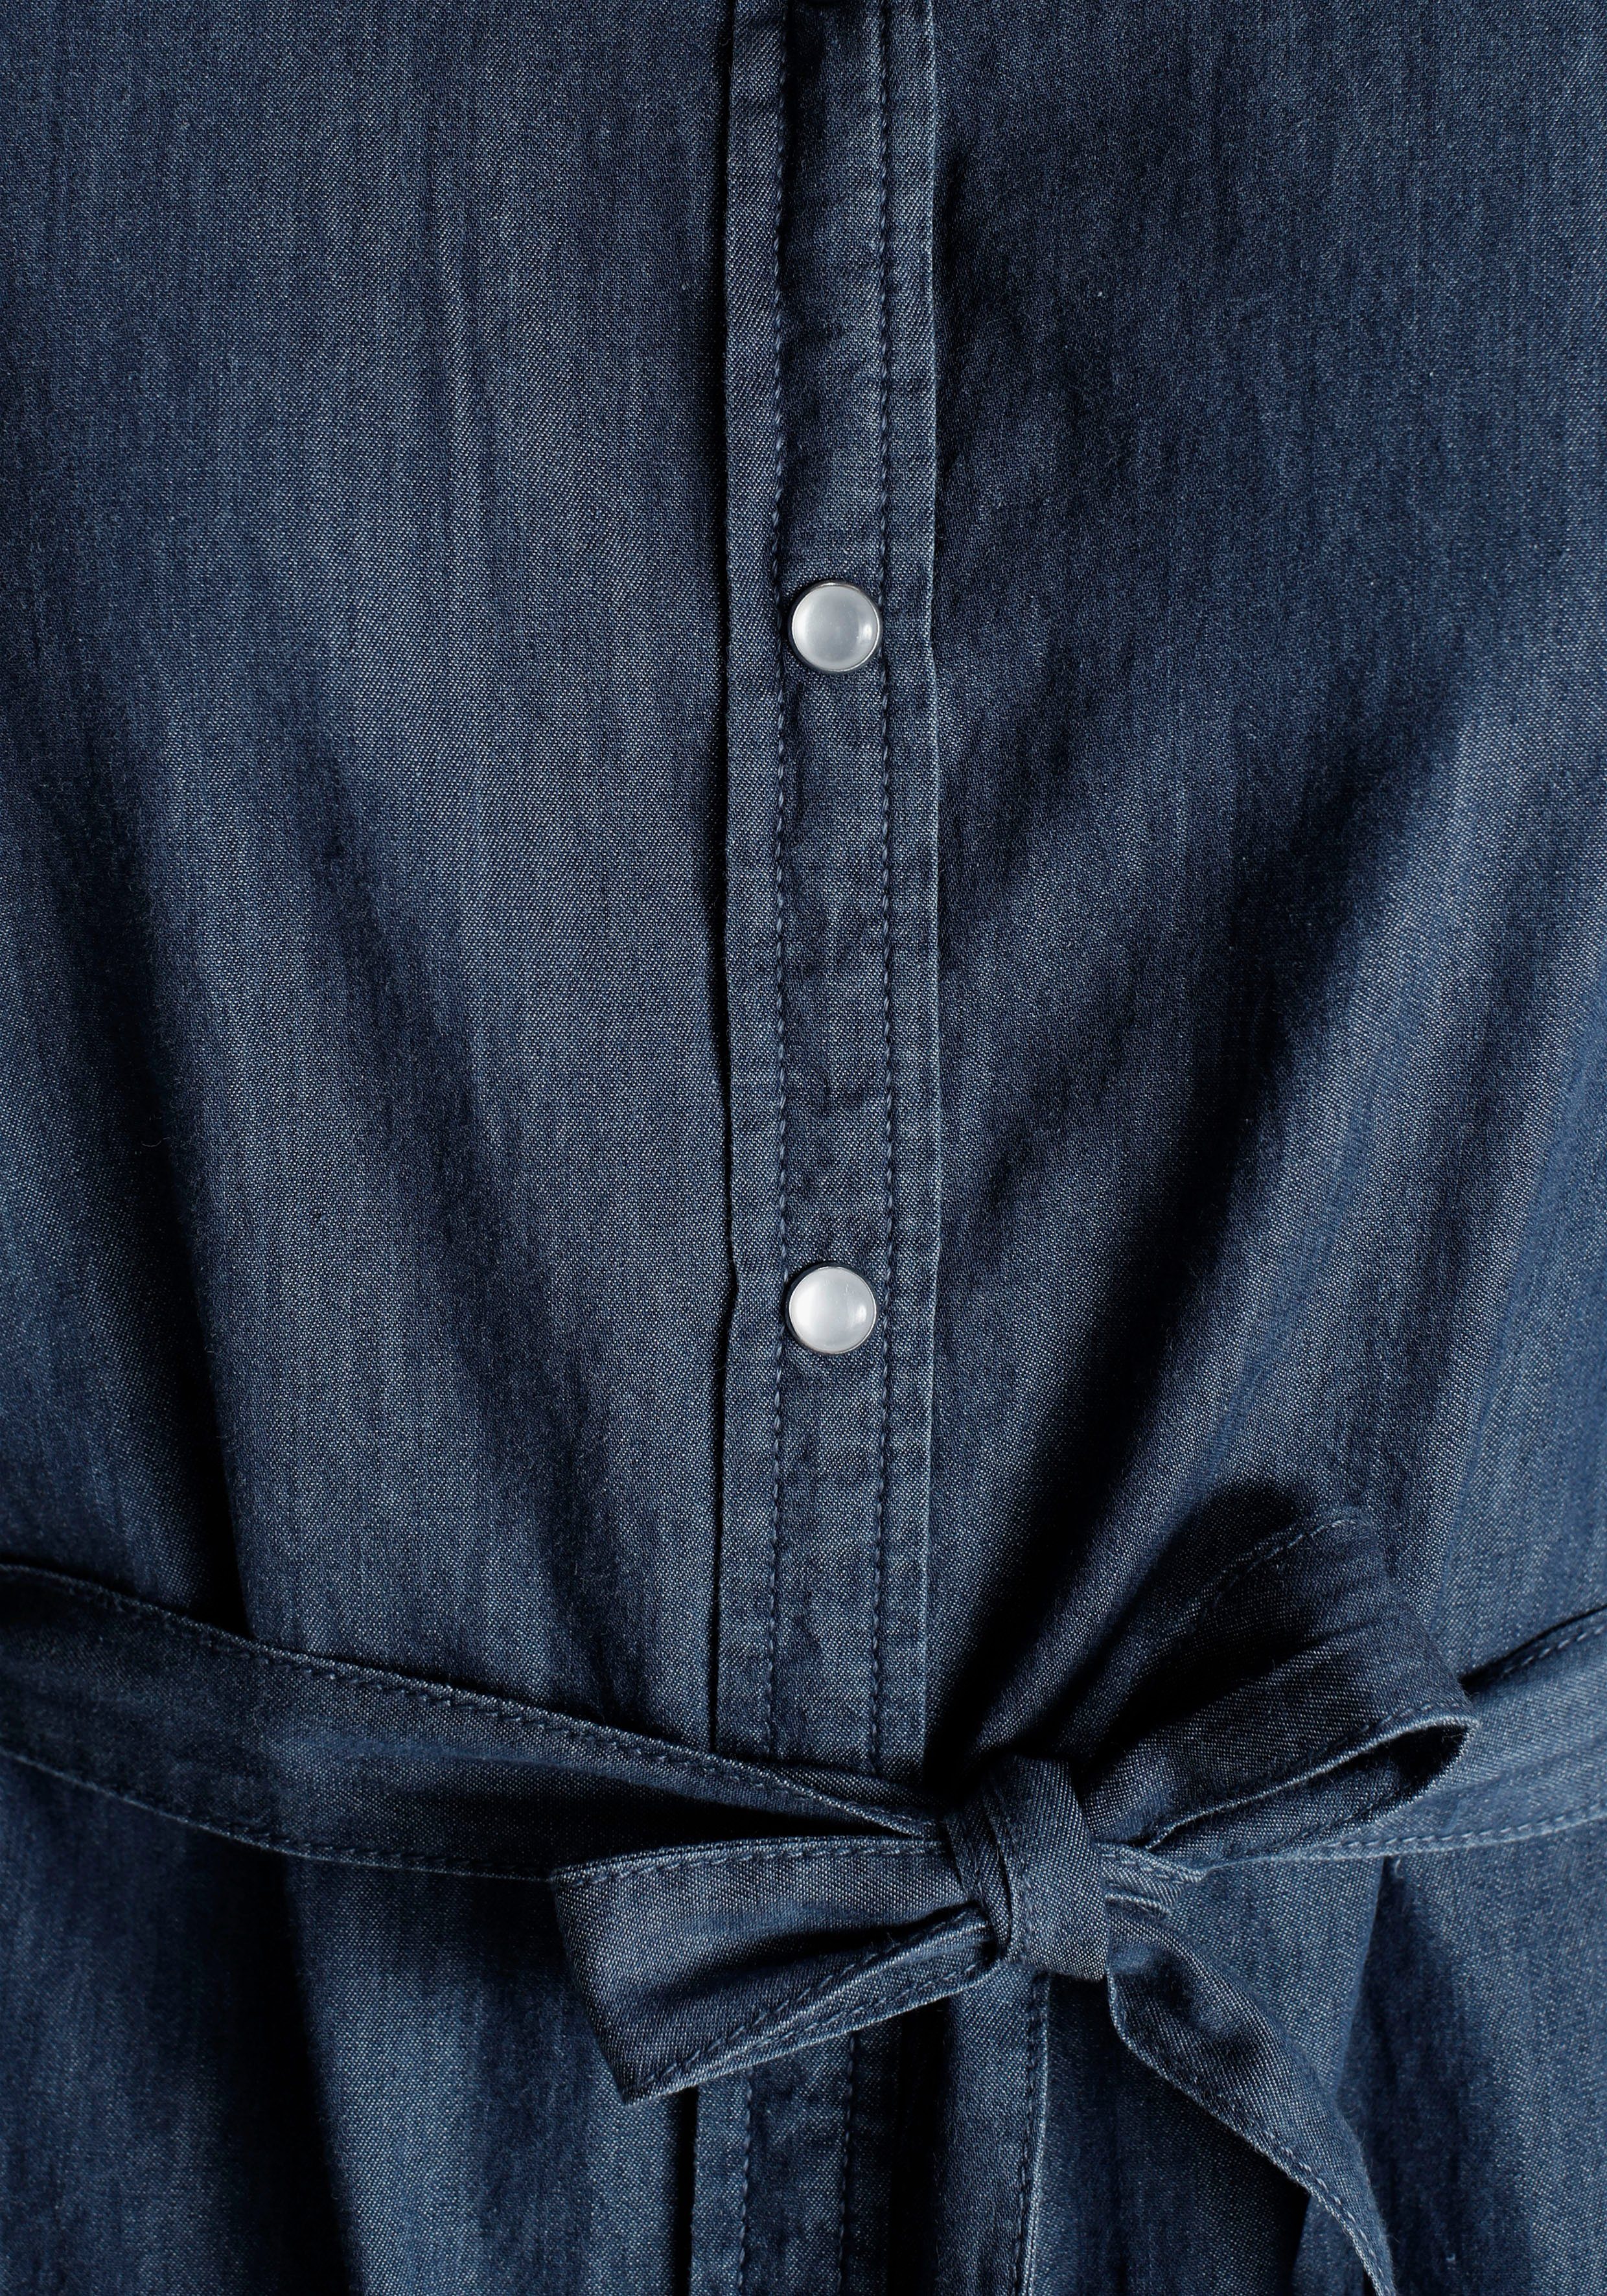 in AJC Hemdblusenkleid KOLLEKTION Jeans-Optik NEUE -